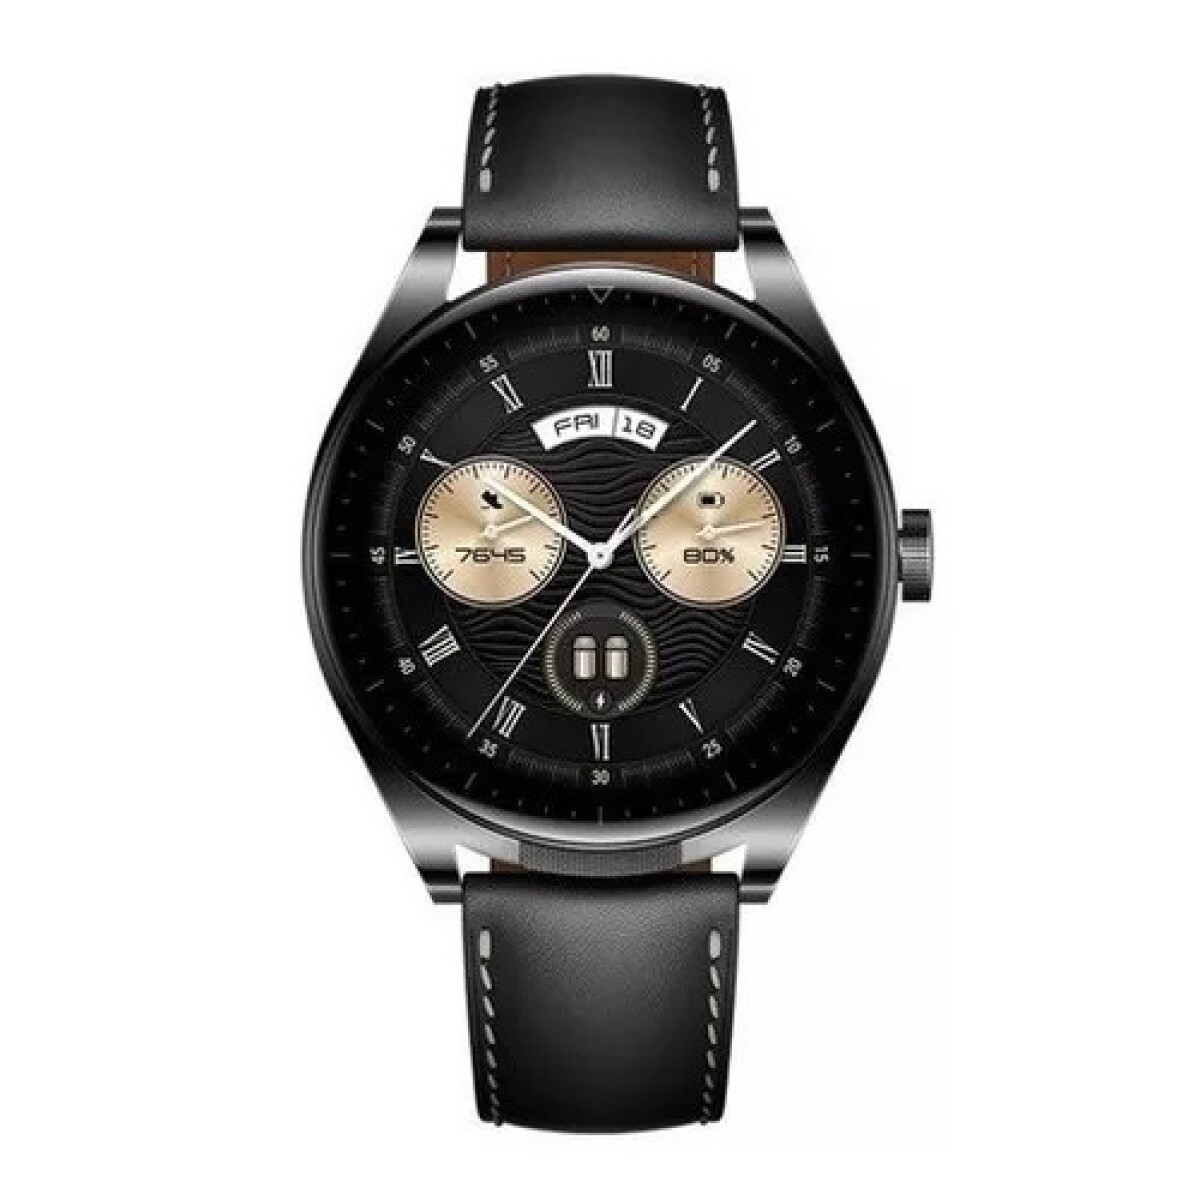 Reloj Smartwatch HUAWEI + Auriculares 1.43' AMOLED BT - Black 